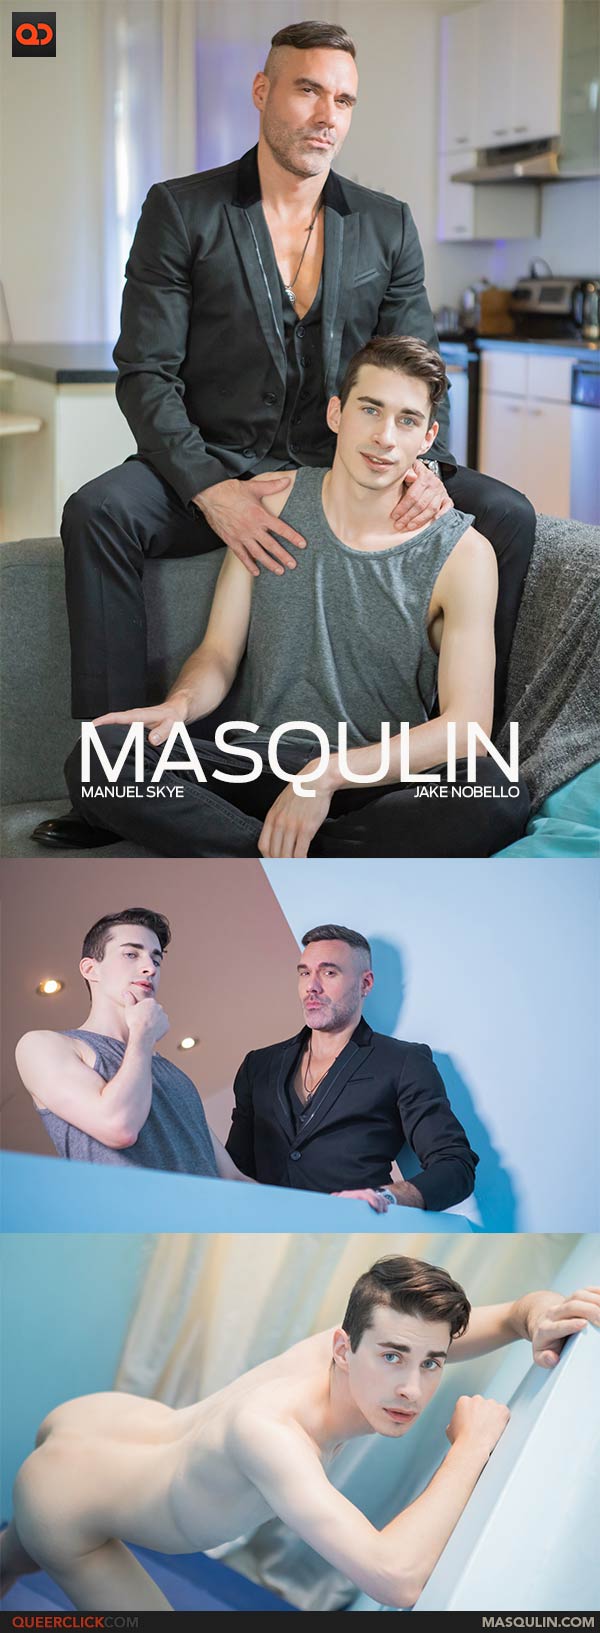 Masqulin: Manuel Skye and Jake Nobello